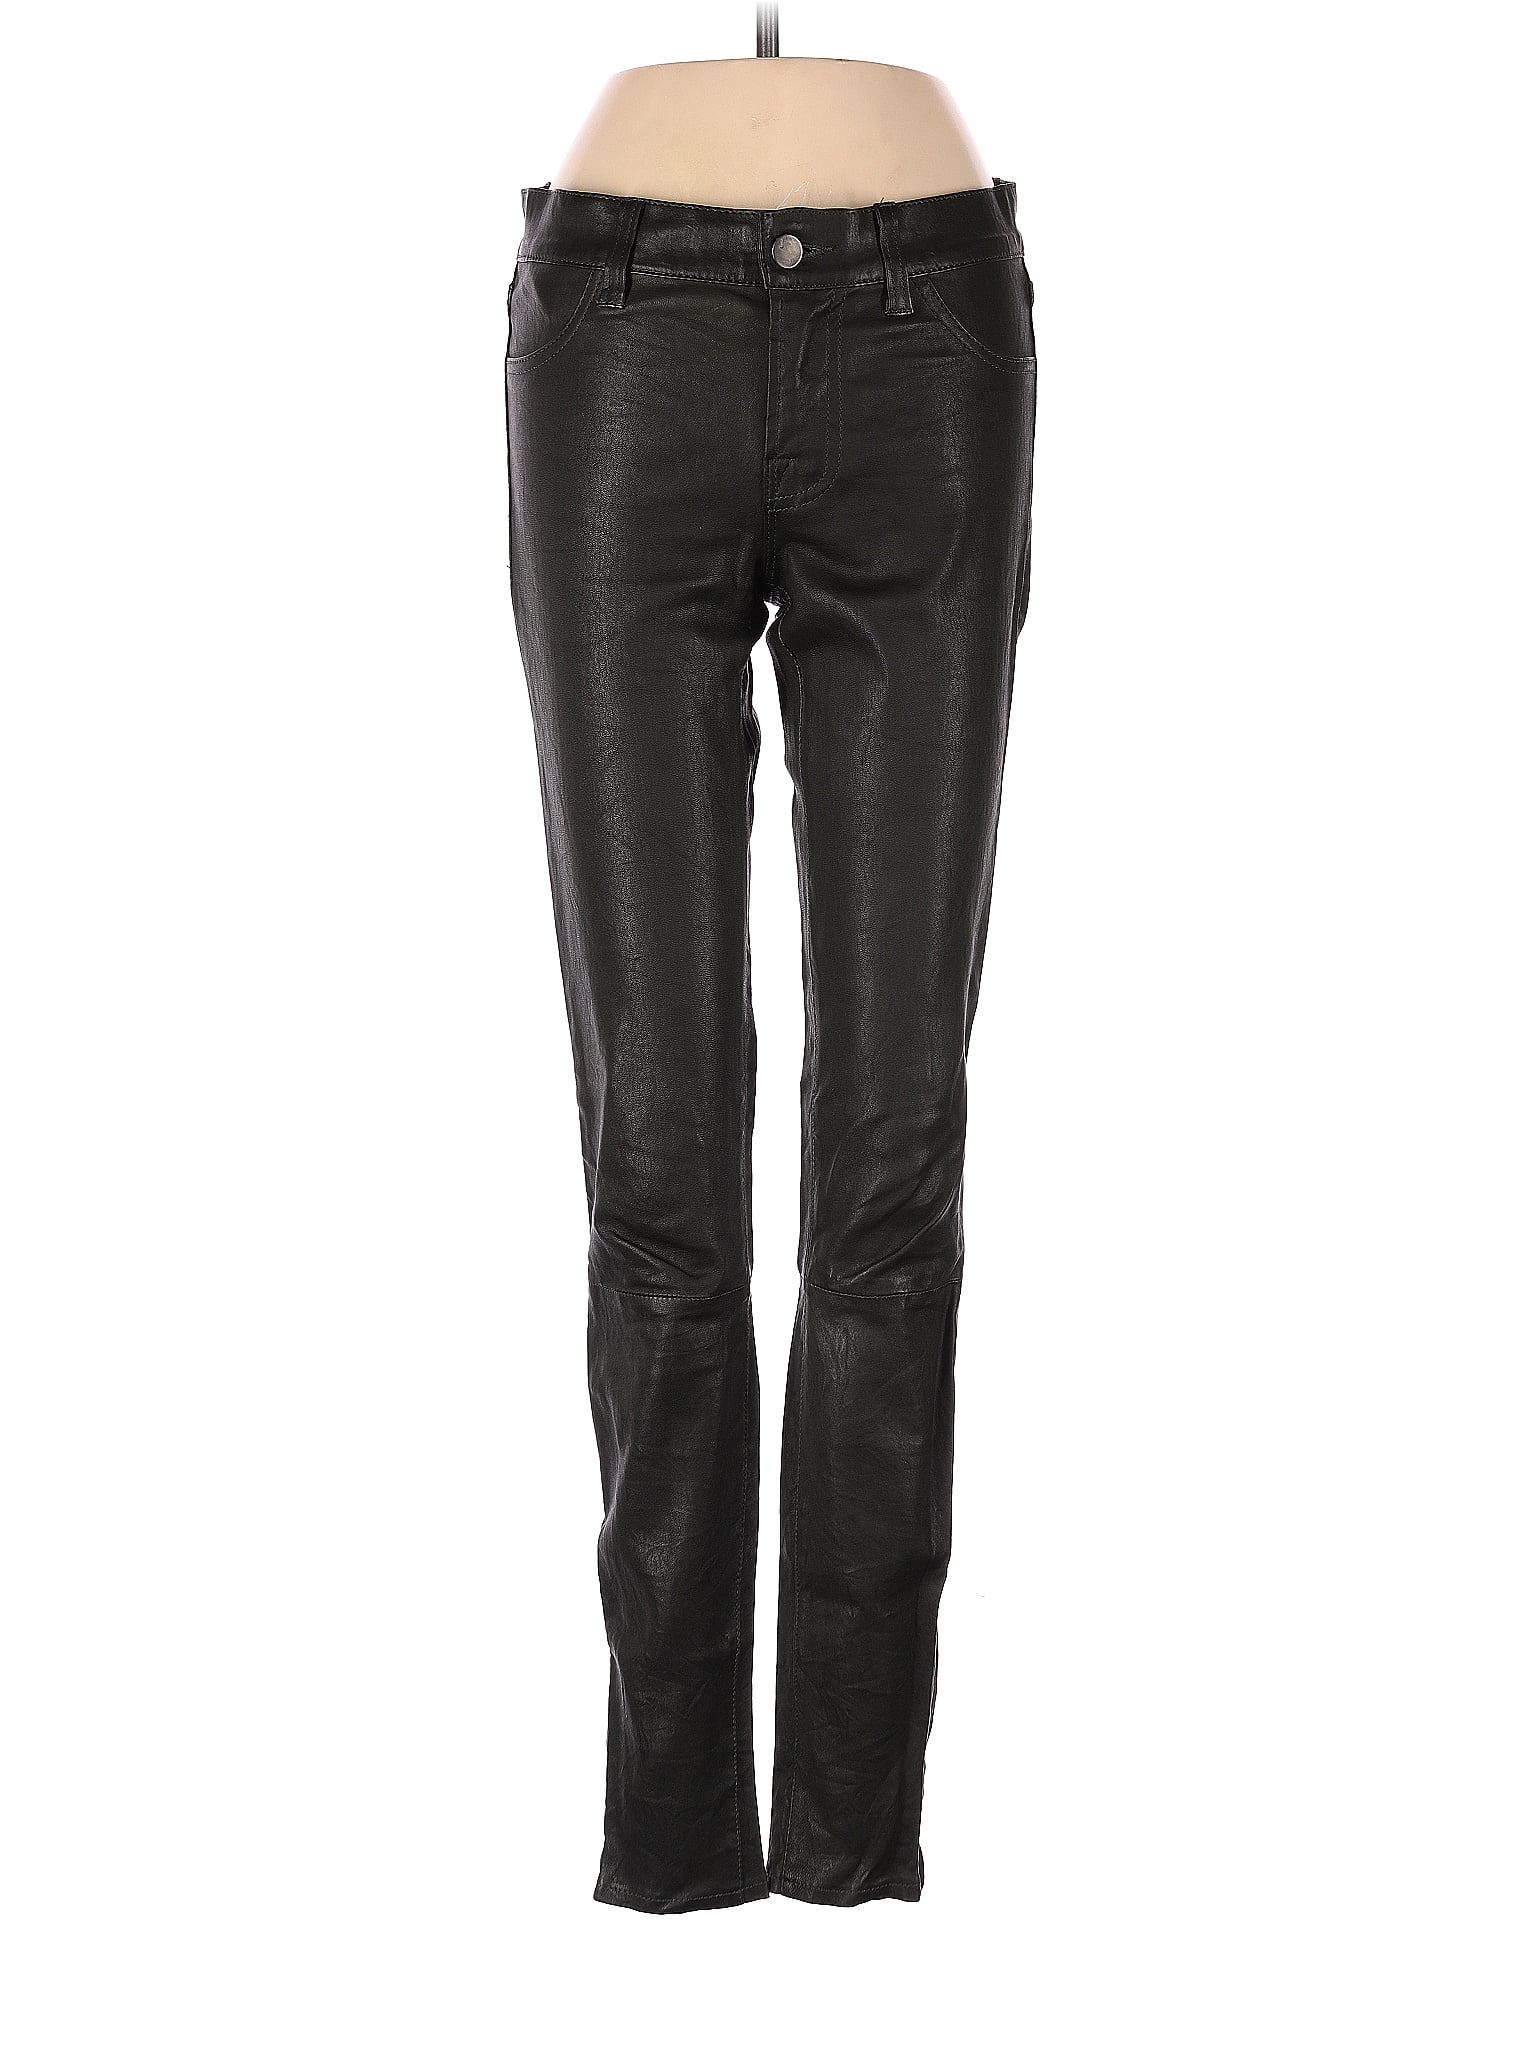 J Brand 100% Leather Solid Black Leather Pants 25 Waist - 84% off | thredUP